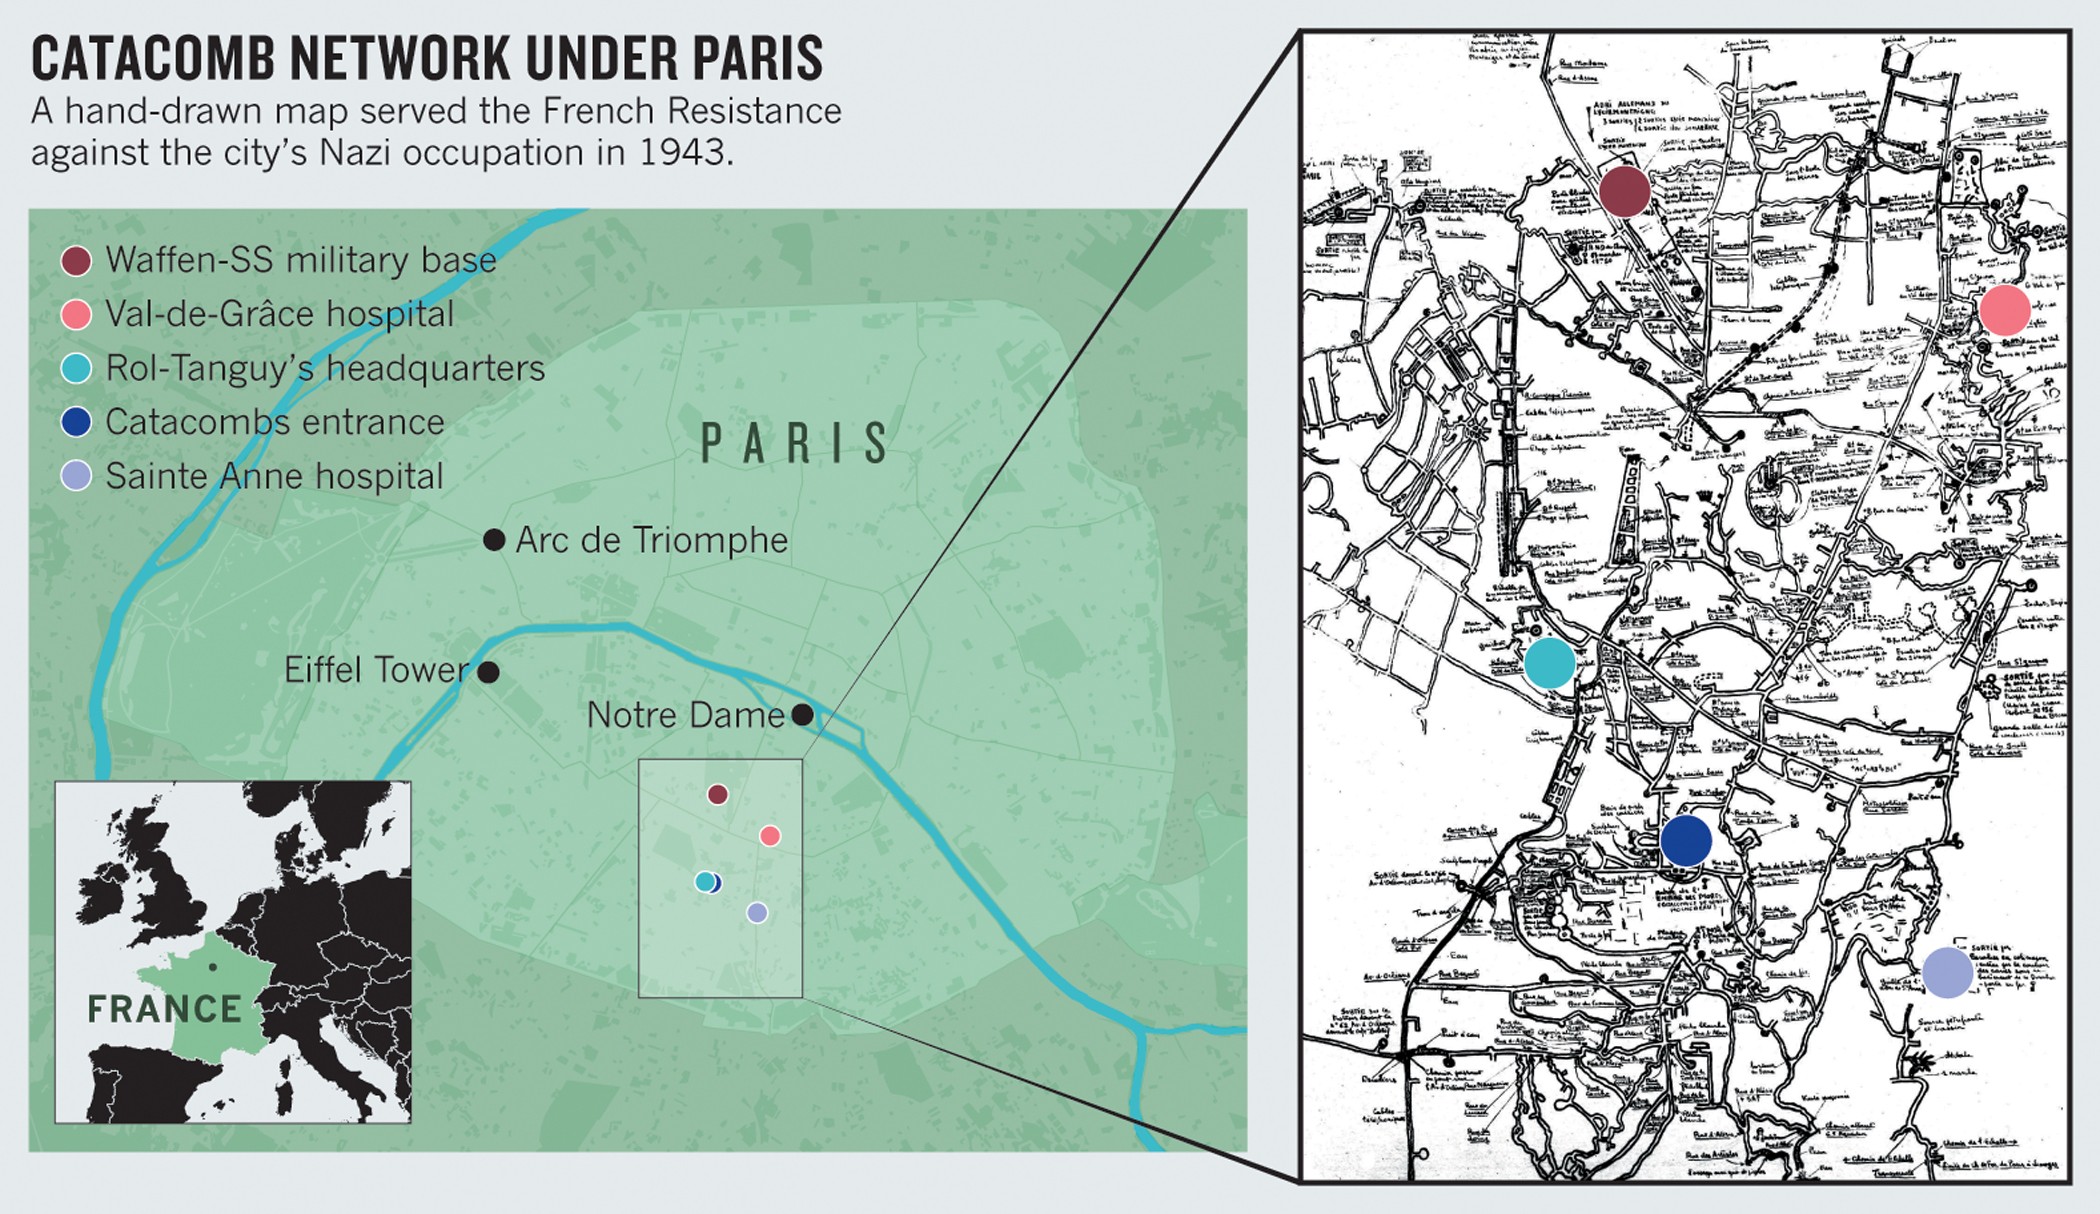 Paris Neurosurgeon S Map Outwitted Nazis Nature